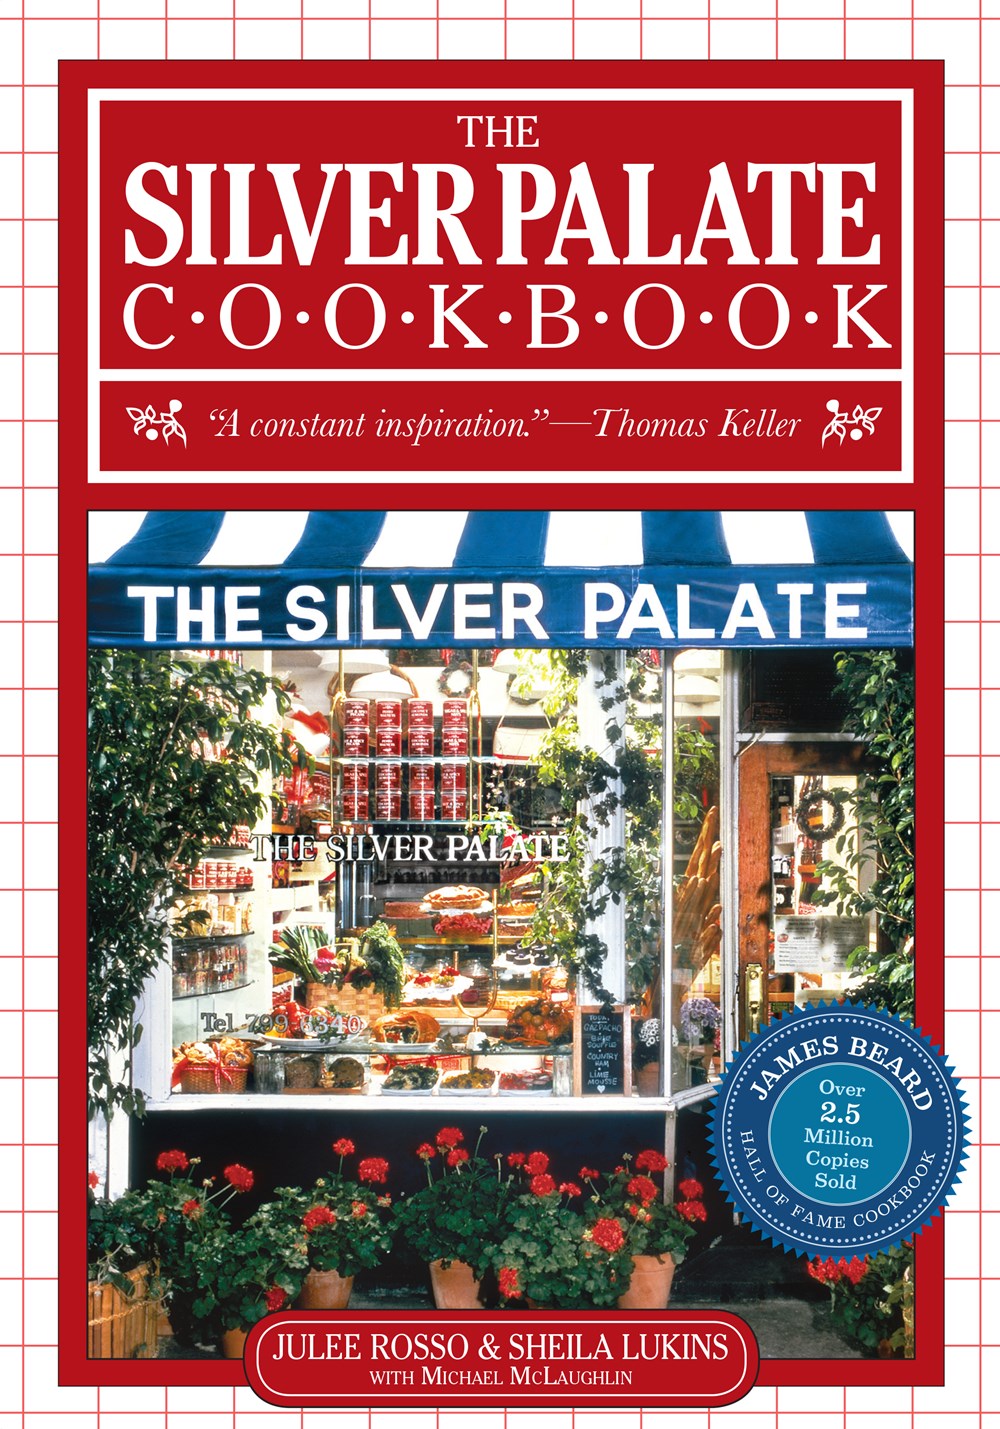 The Joy of Cookbooks: Top Picks for Fans of Recipes | The Reader’s Shelf